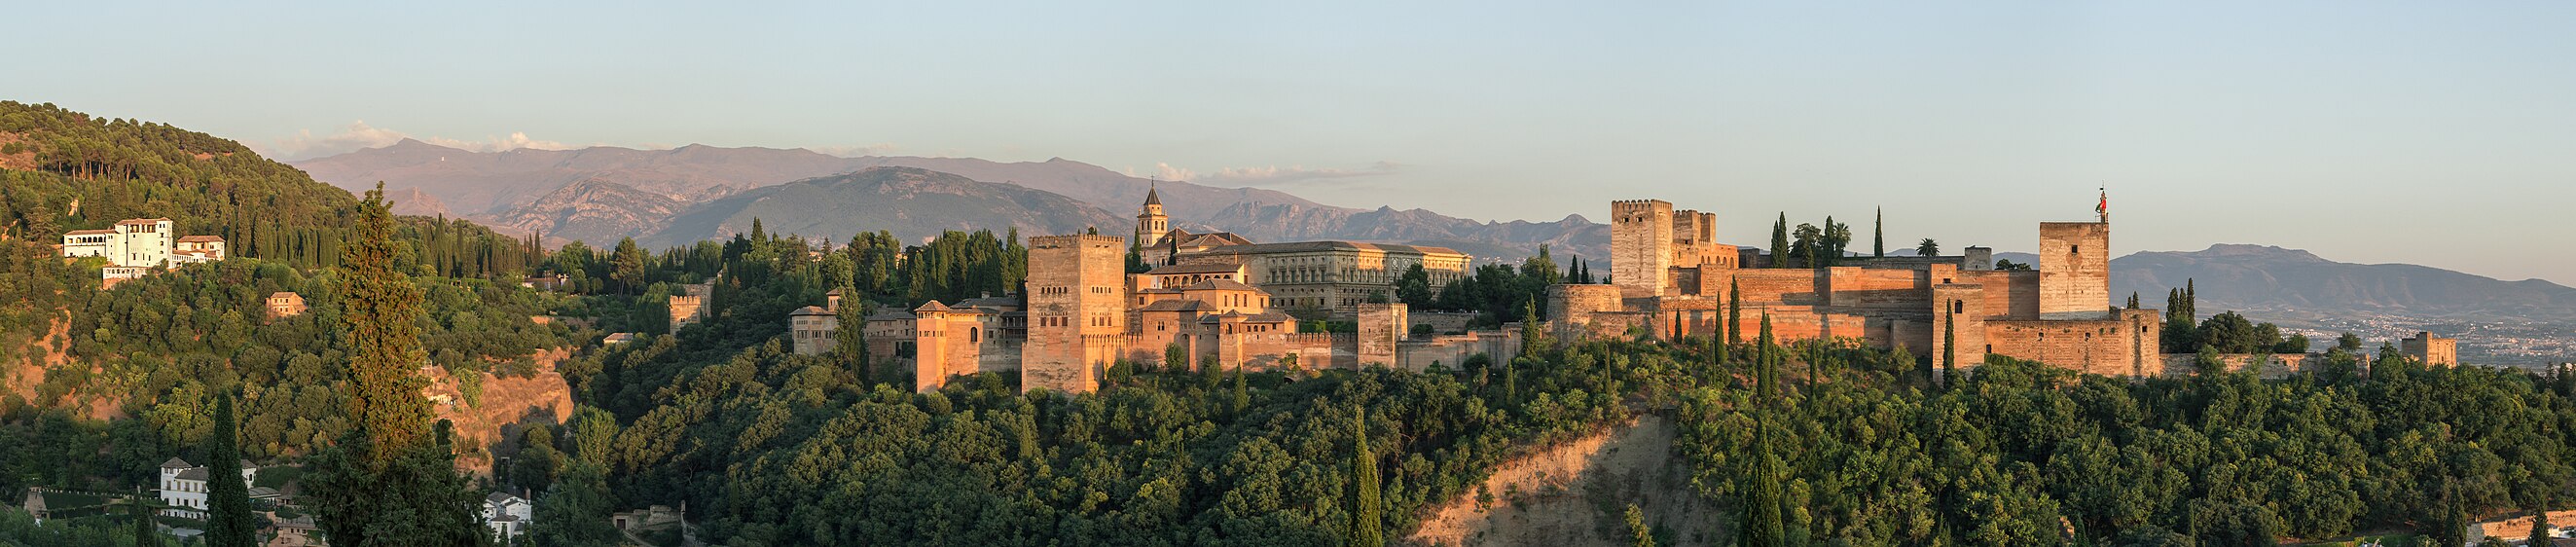 Evening panorama of Alhambra from Mirador de San Nicolas.